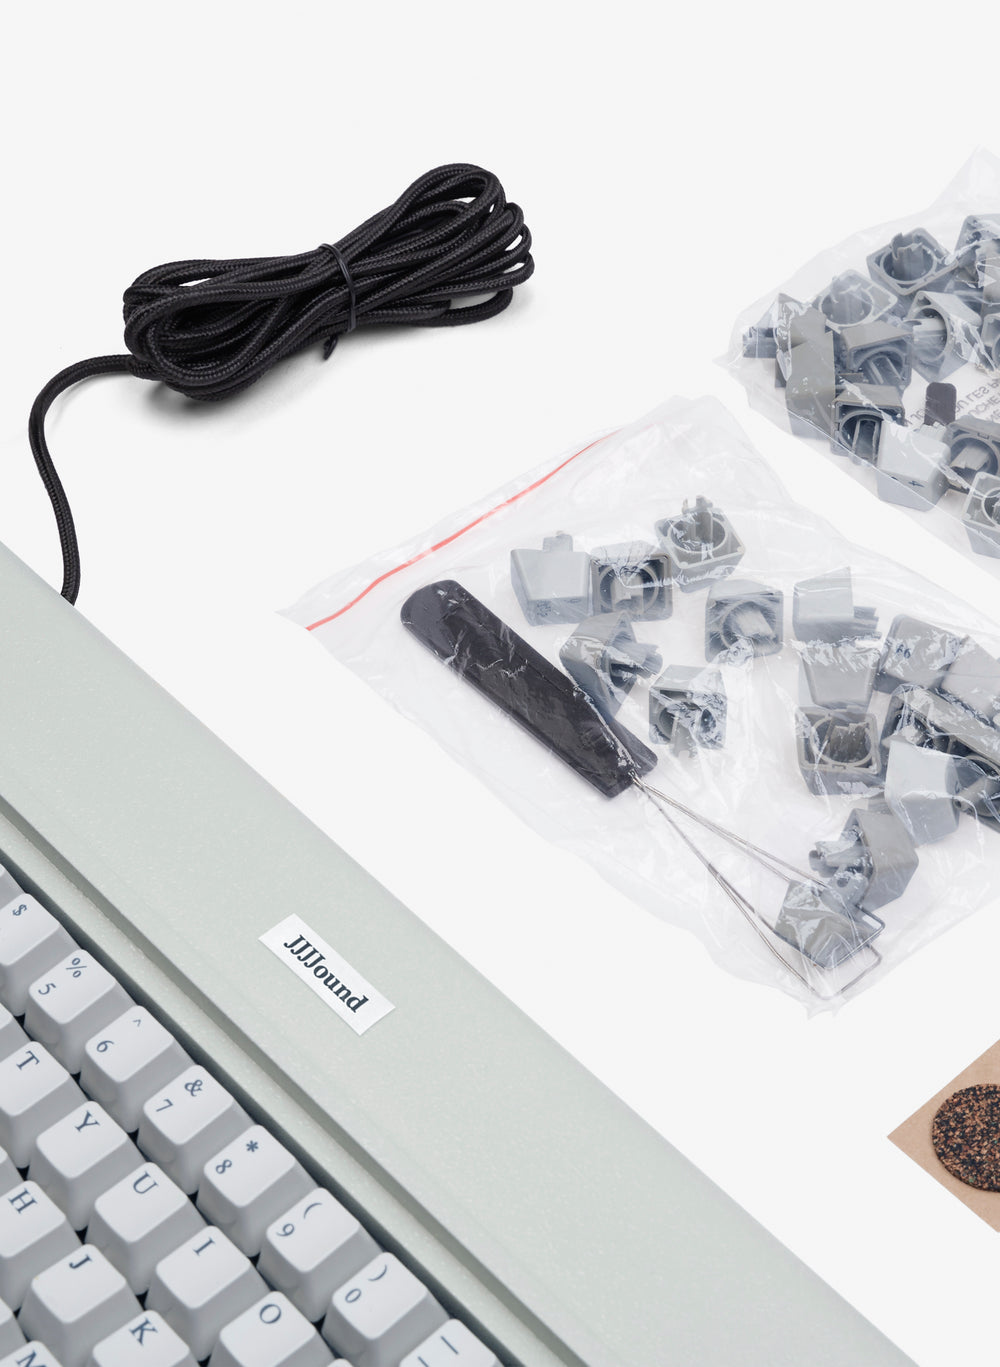 JJJJound Mechanical Keyboard - Off White / Beige